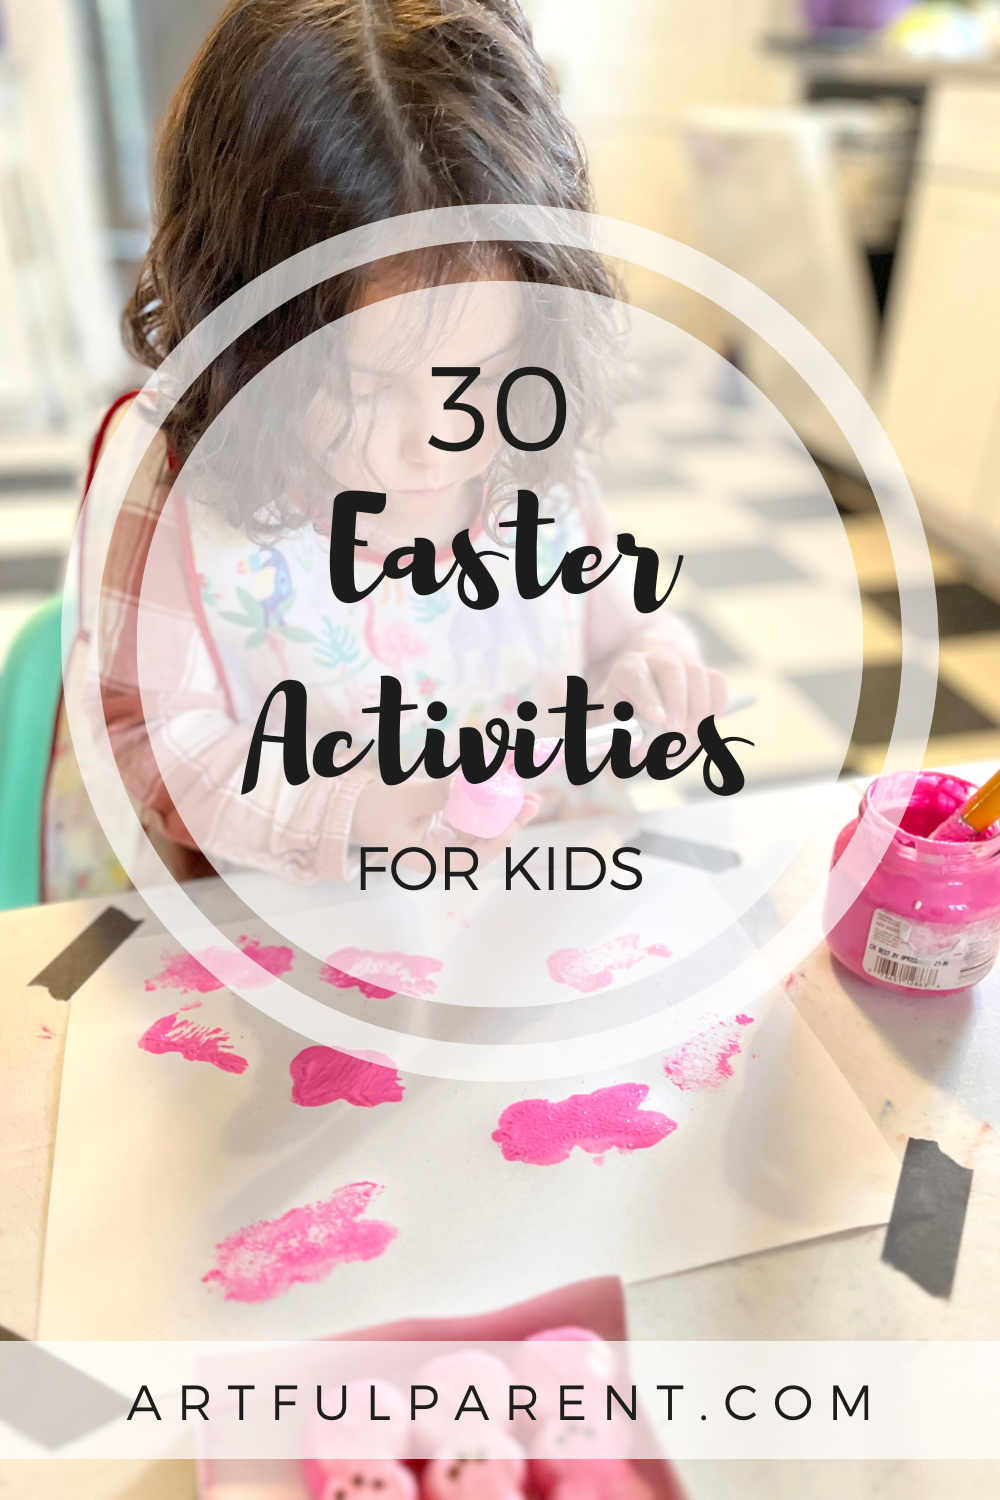 30 Easter Activities for Kids